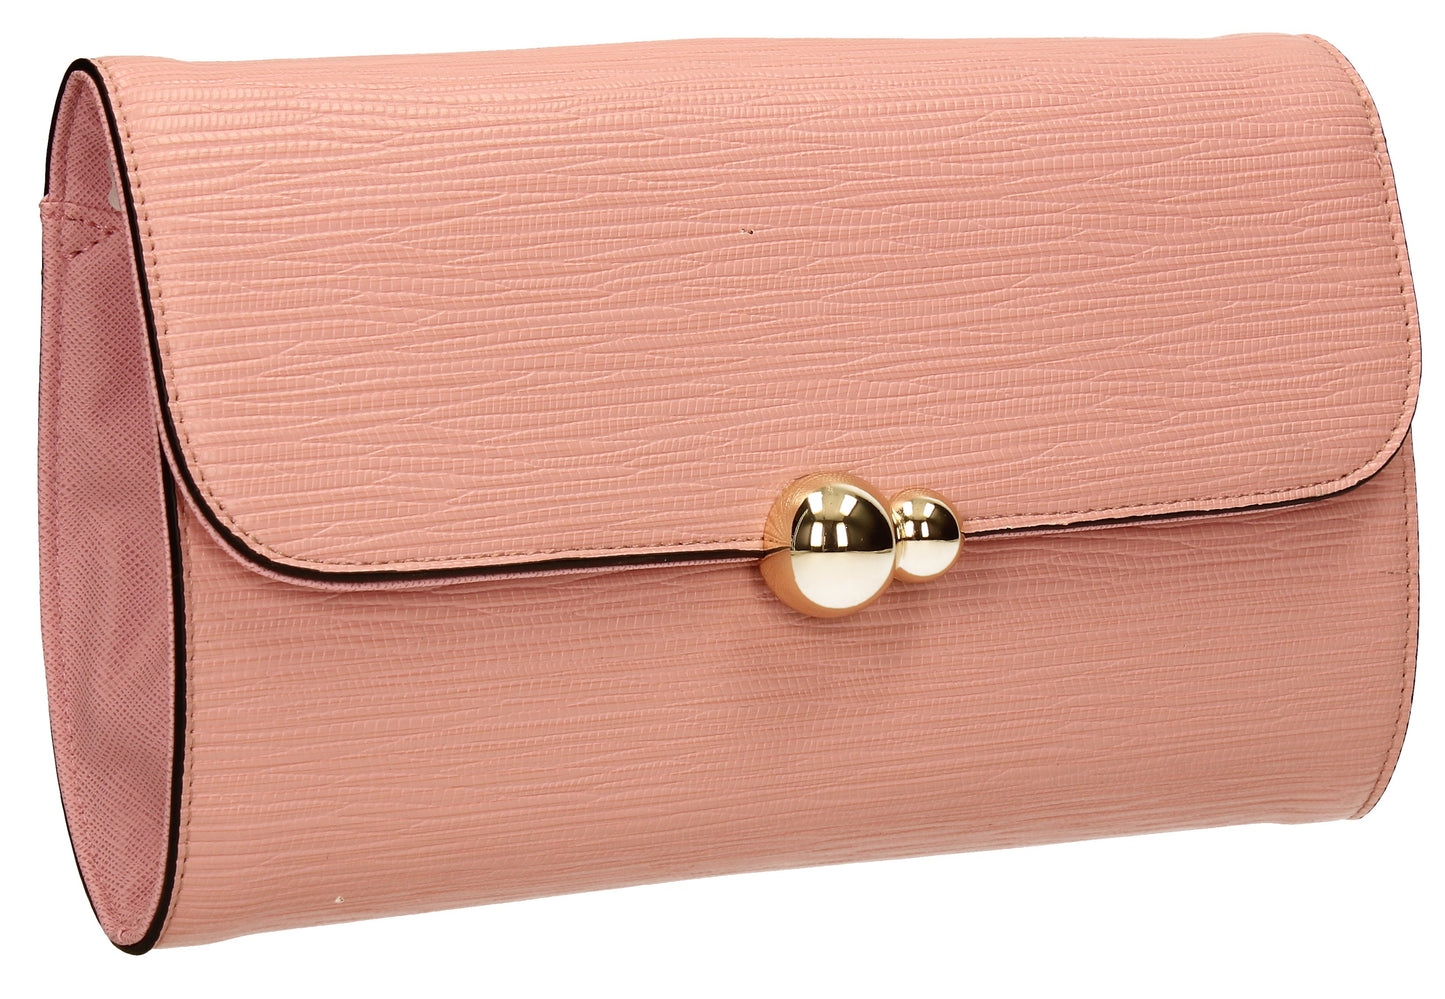 SWANKYSWANS Violet Clutch Bag Pink Cute Cheap Clutch Bag For Weddings School and Work